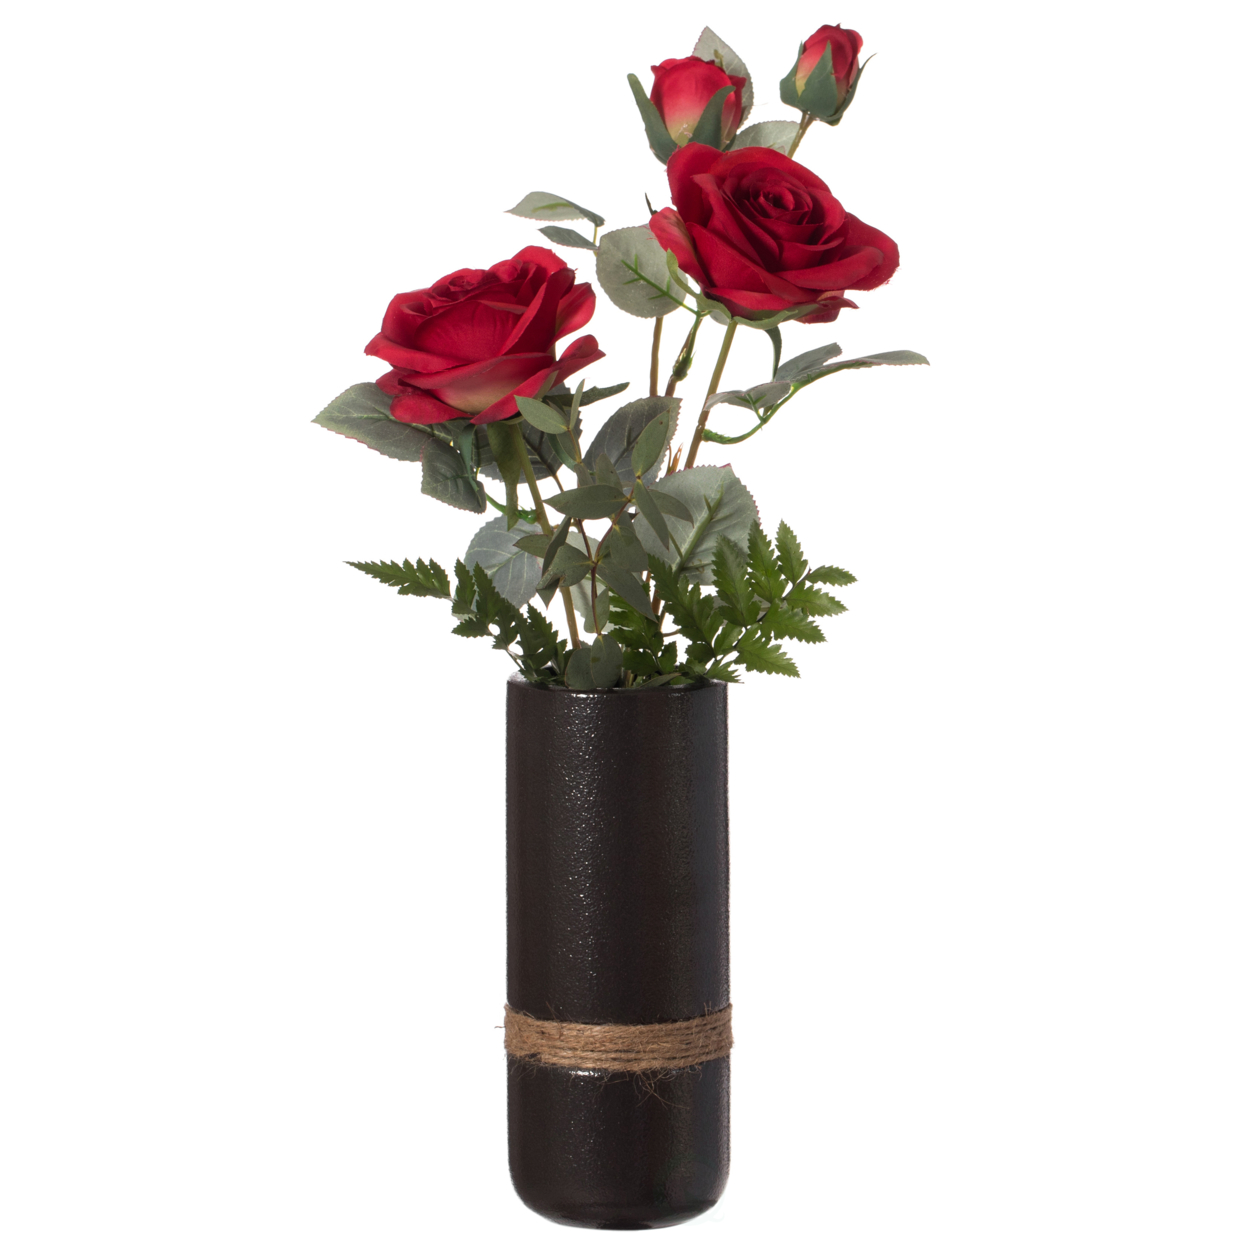 Decorative Modern Ceramic Cylinder Shape Table Vase Flower Holder With Rope - Small Black